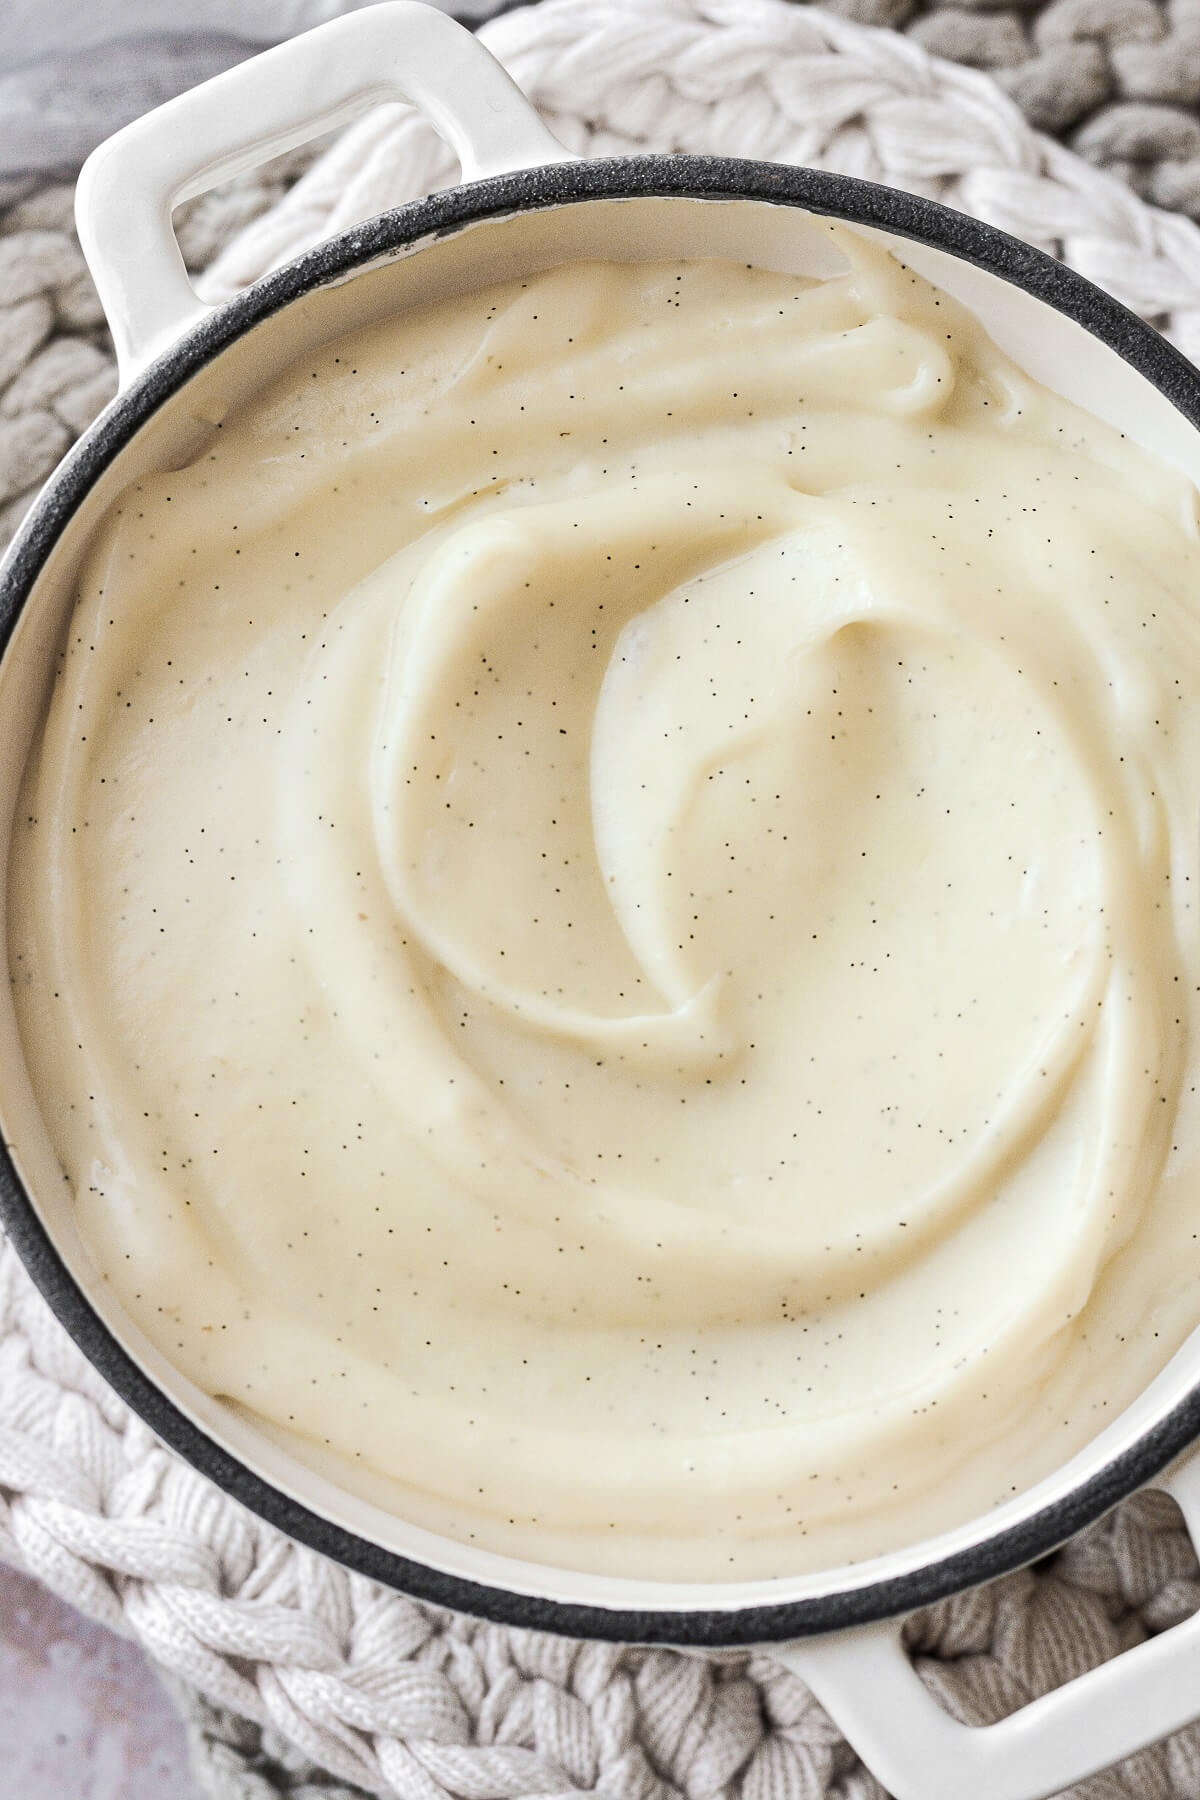 Closeup of vanilla bean specks in homemade custard.